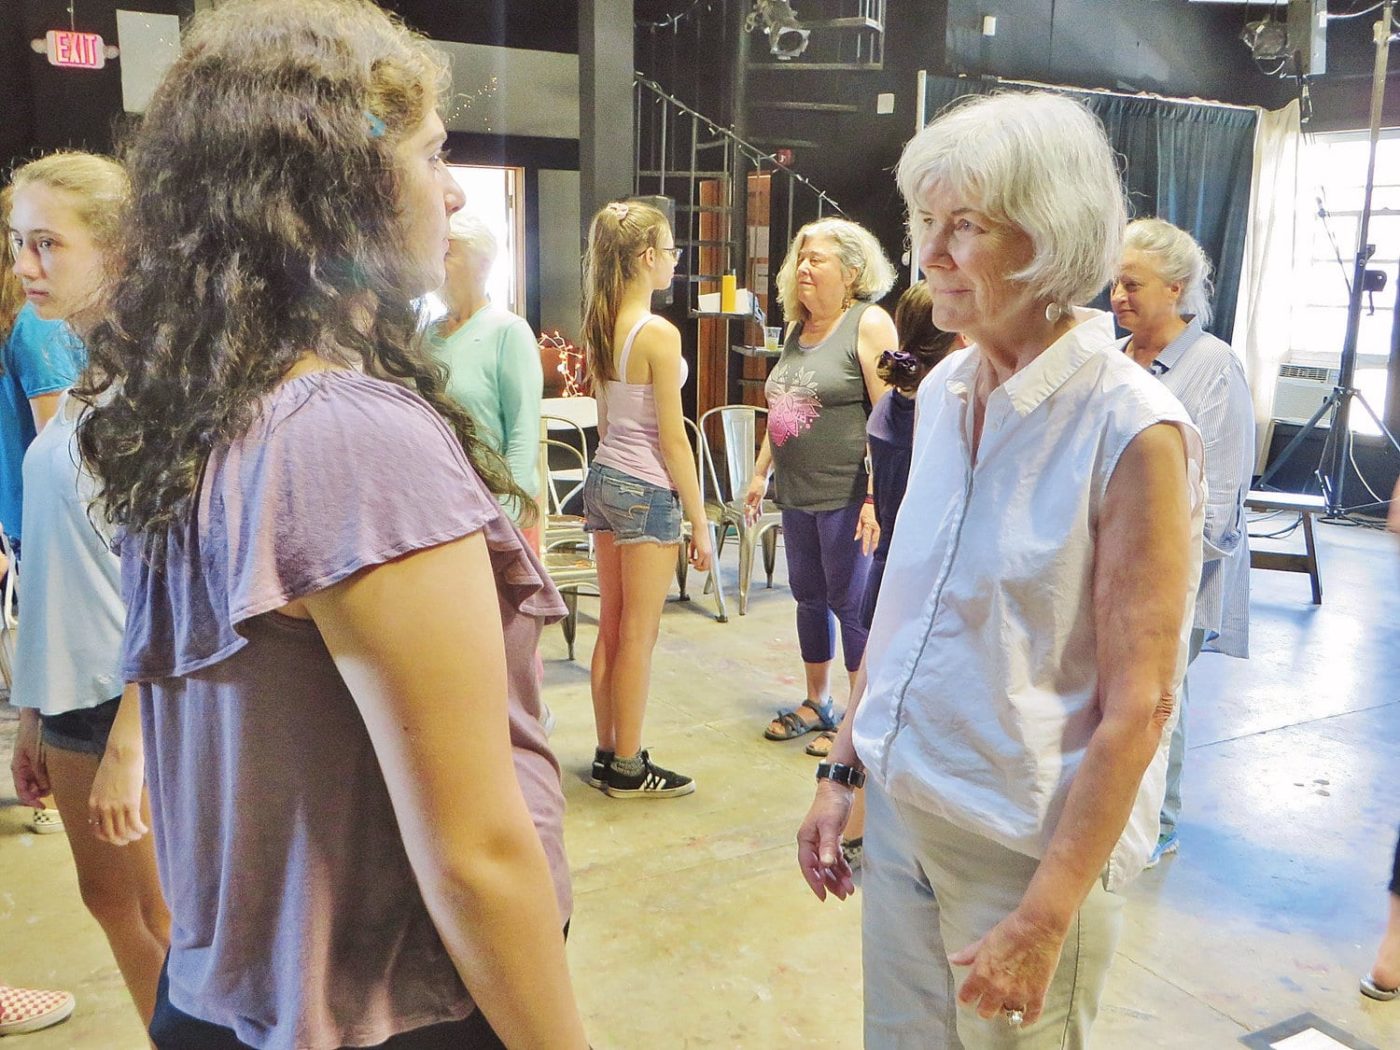 Elders, teens make dreams come true in special WAM Theatre event